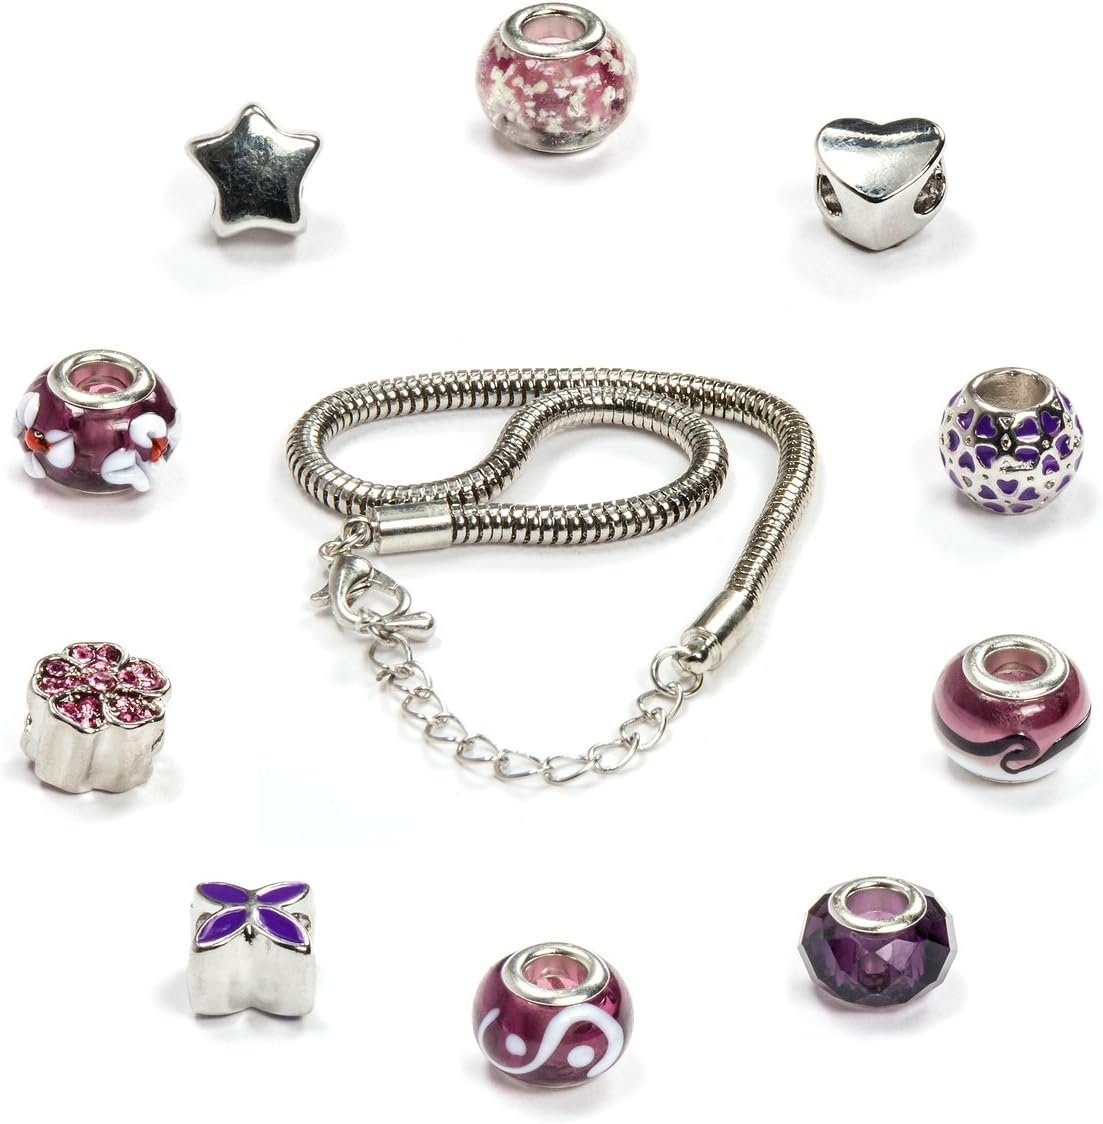 VALIOSA Schmuck-Adventskalender, Merry Christmas' Halskette, Armband Perlen-Anhänger 22 individuelle 